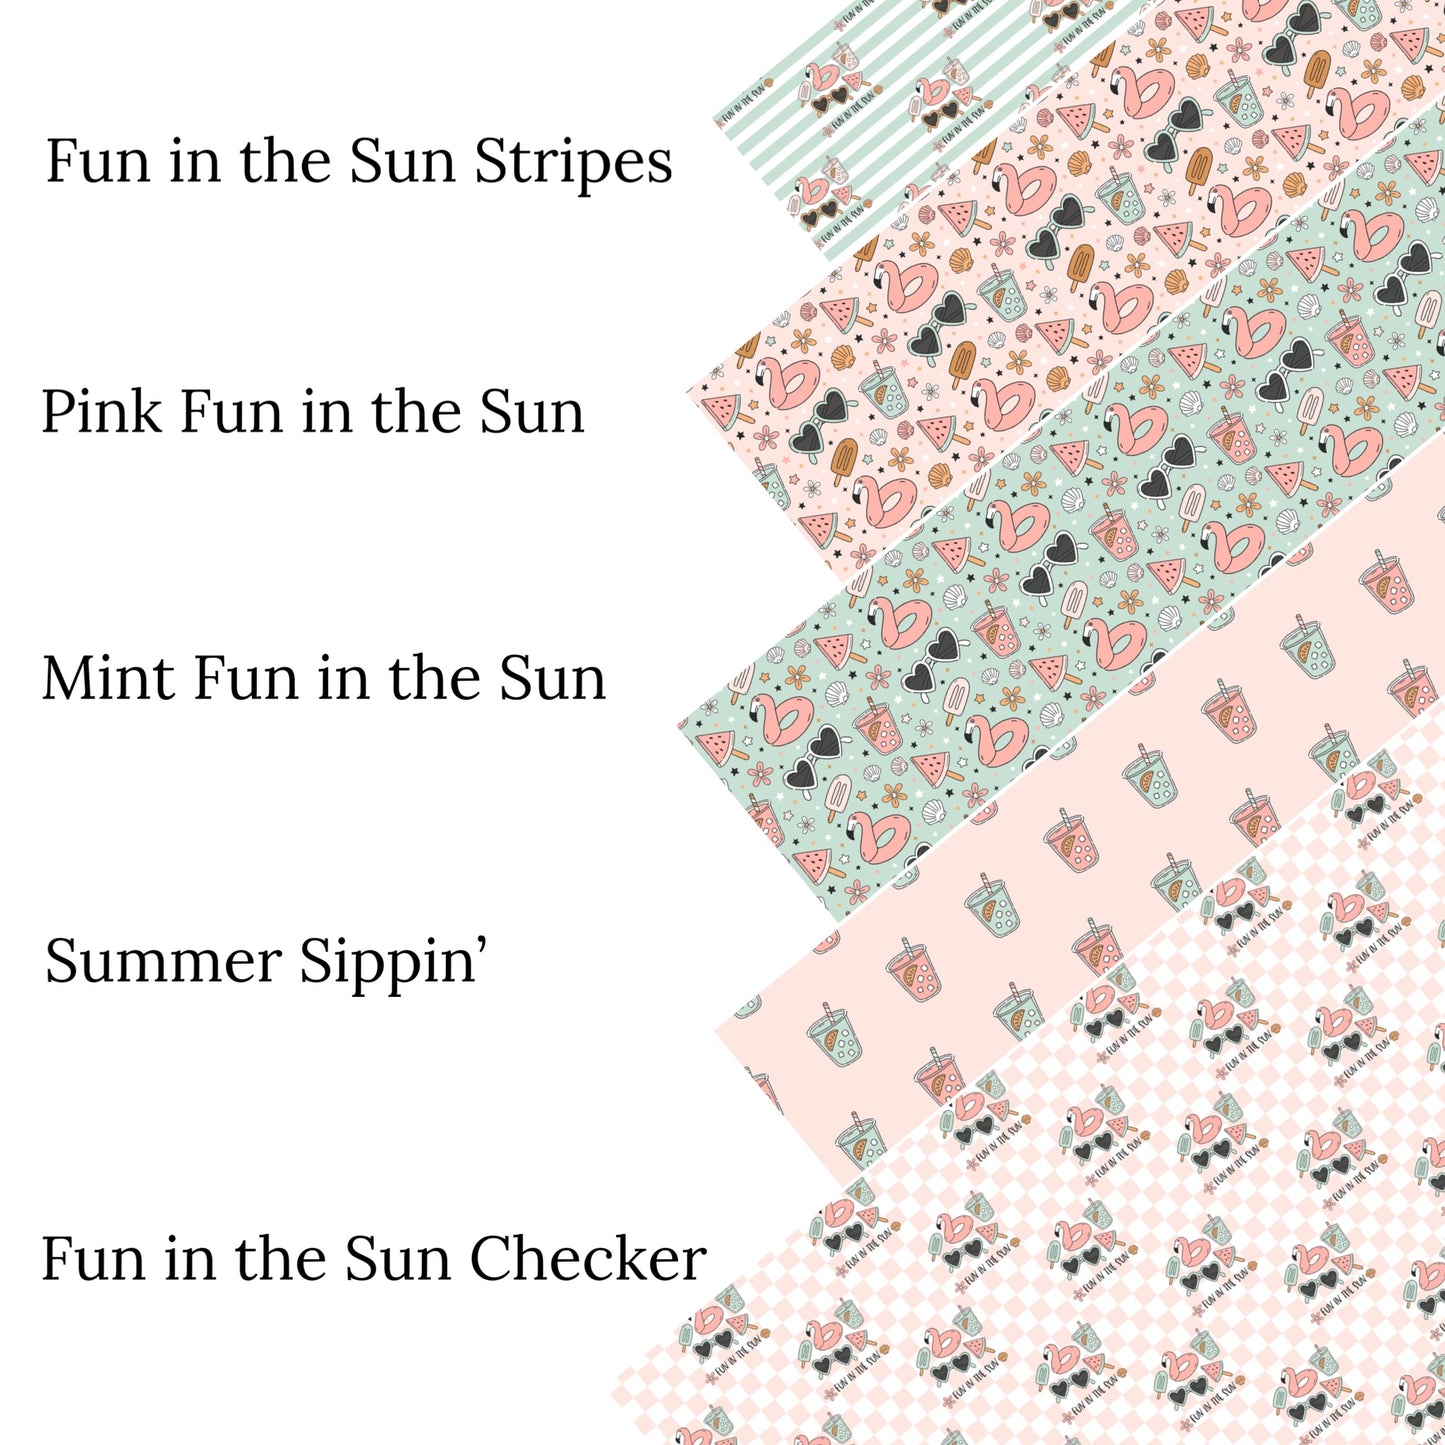 Fun in the Sun Checker Faux Leather Sheets